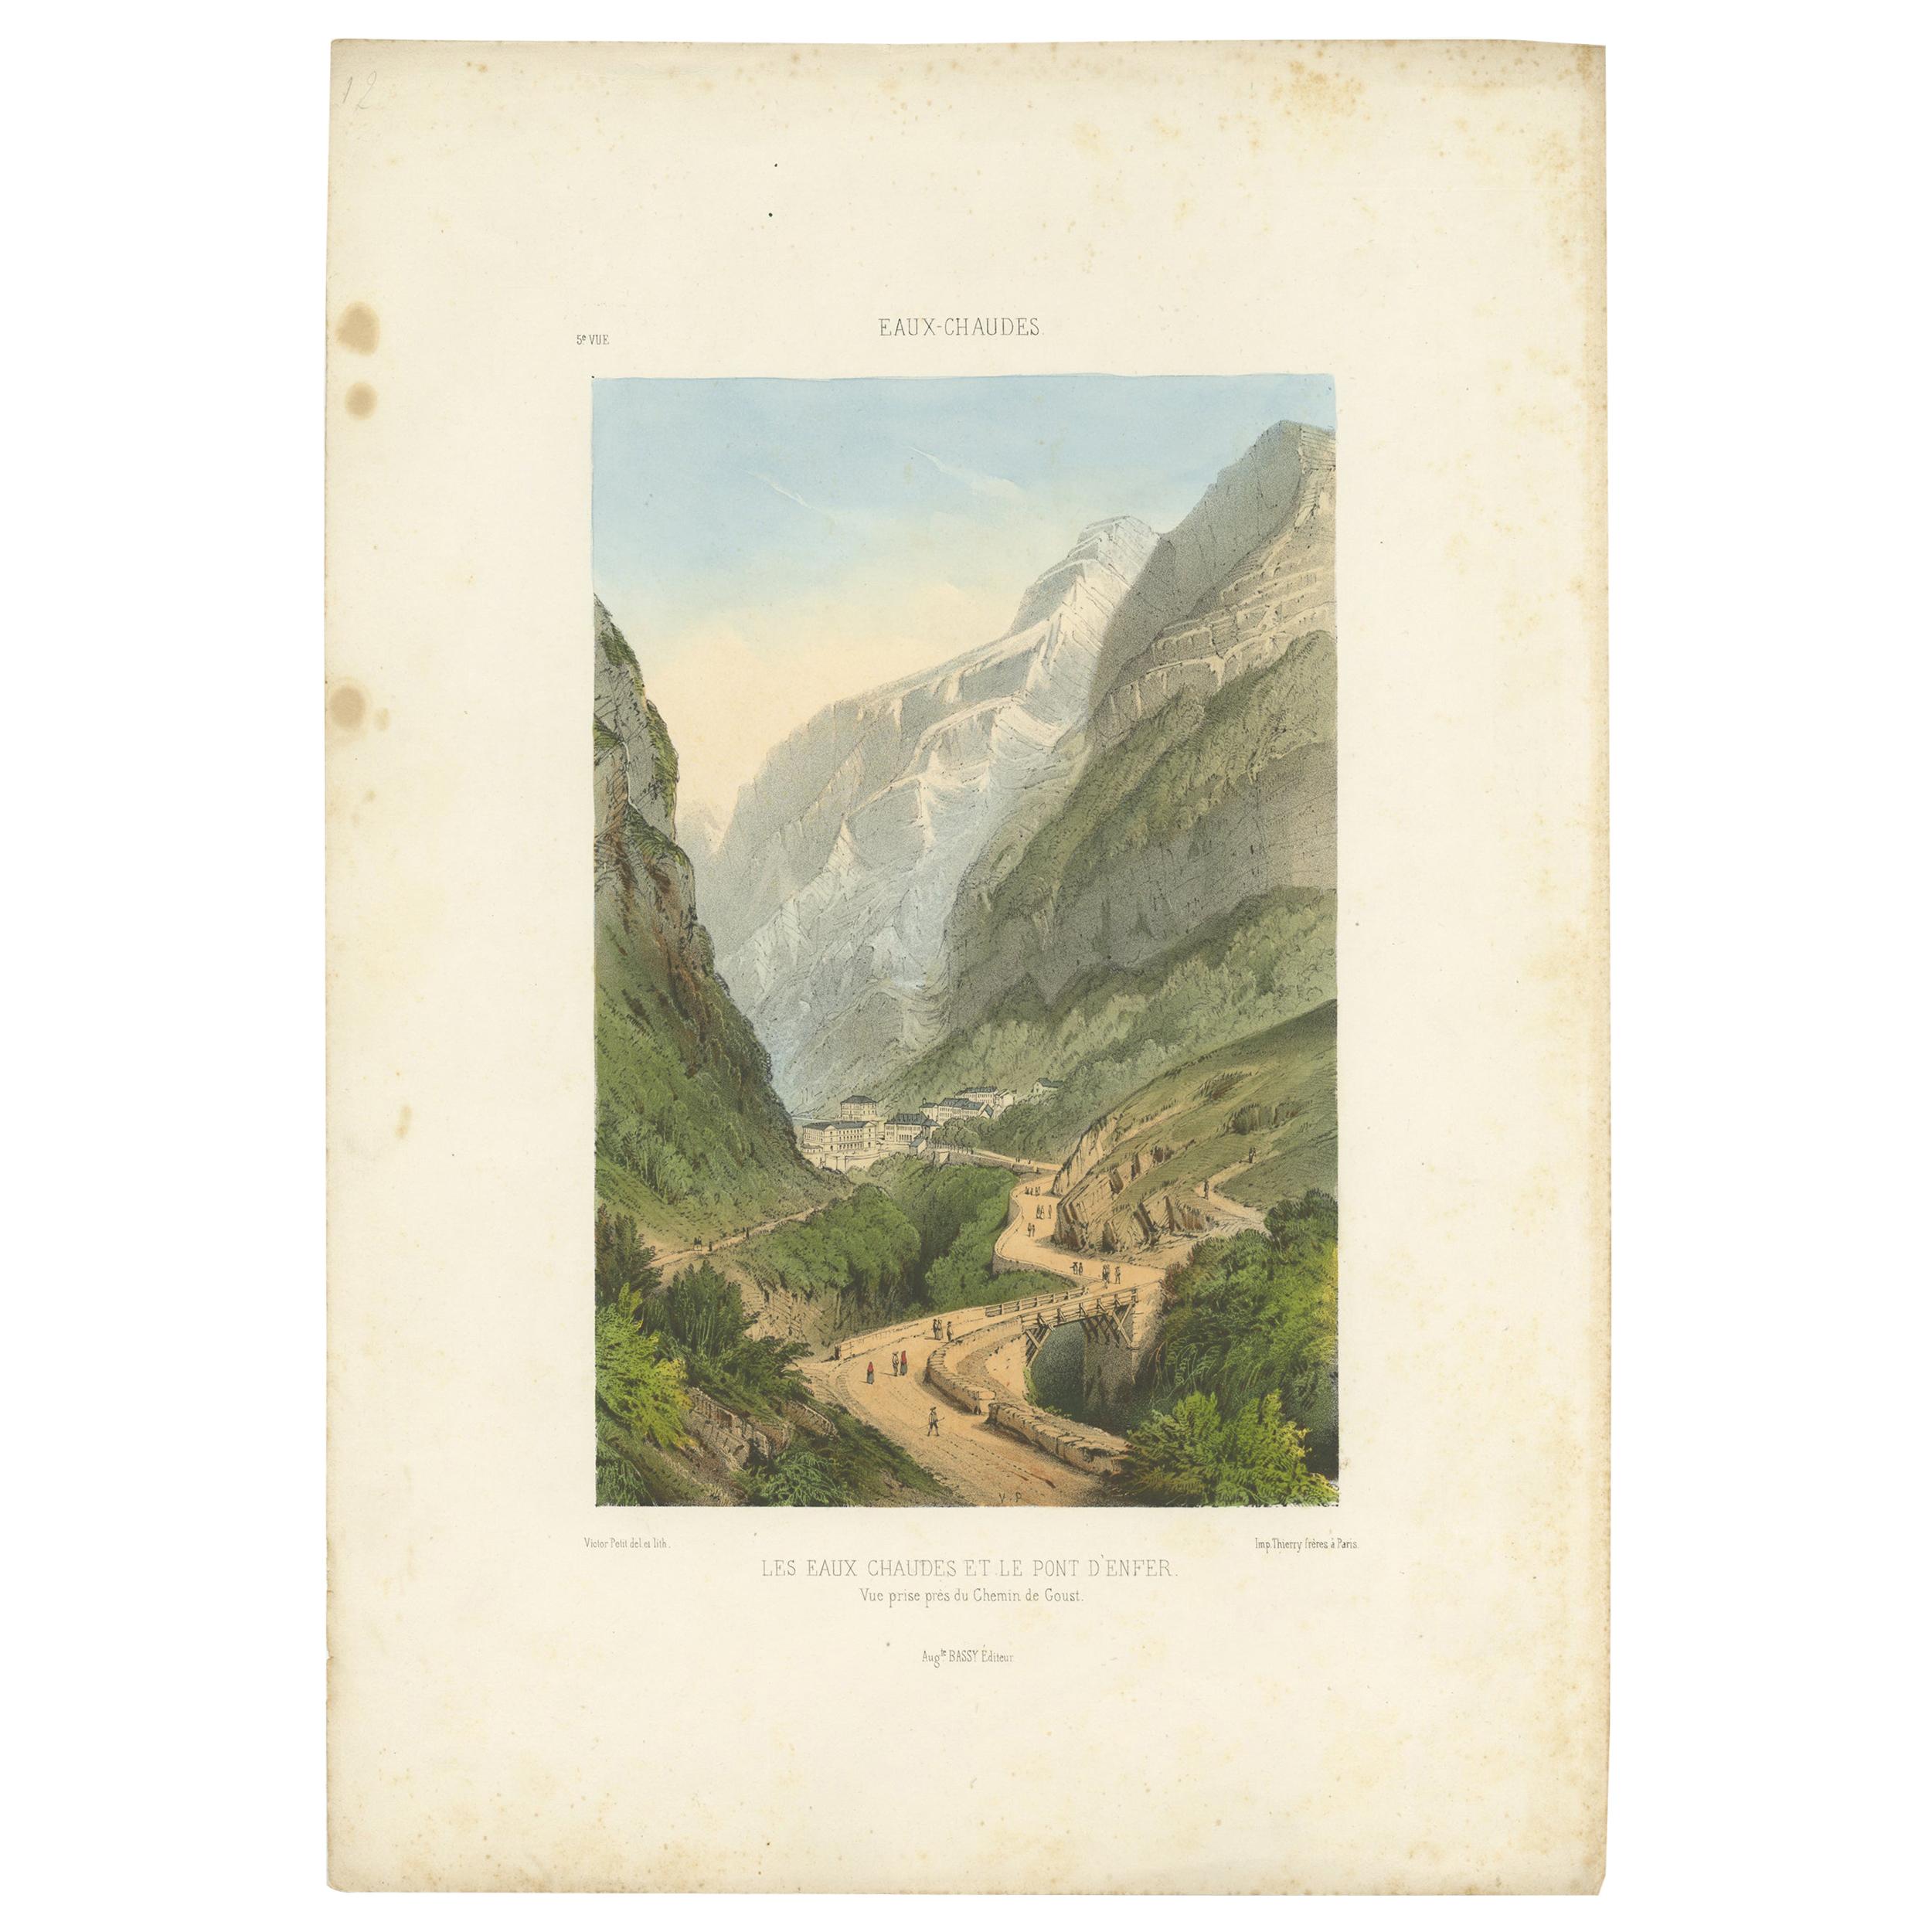 Antique Print of the Eaux-Chaudes Valley and Bridge by Bassy, 'c.1890'